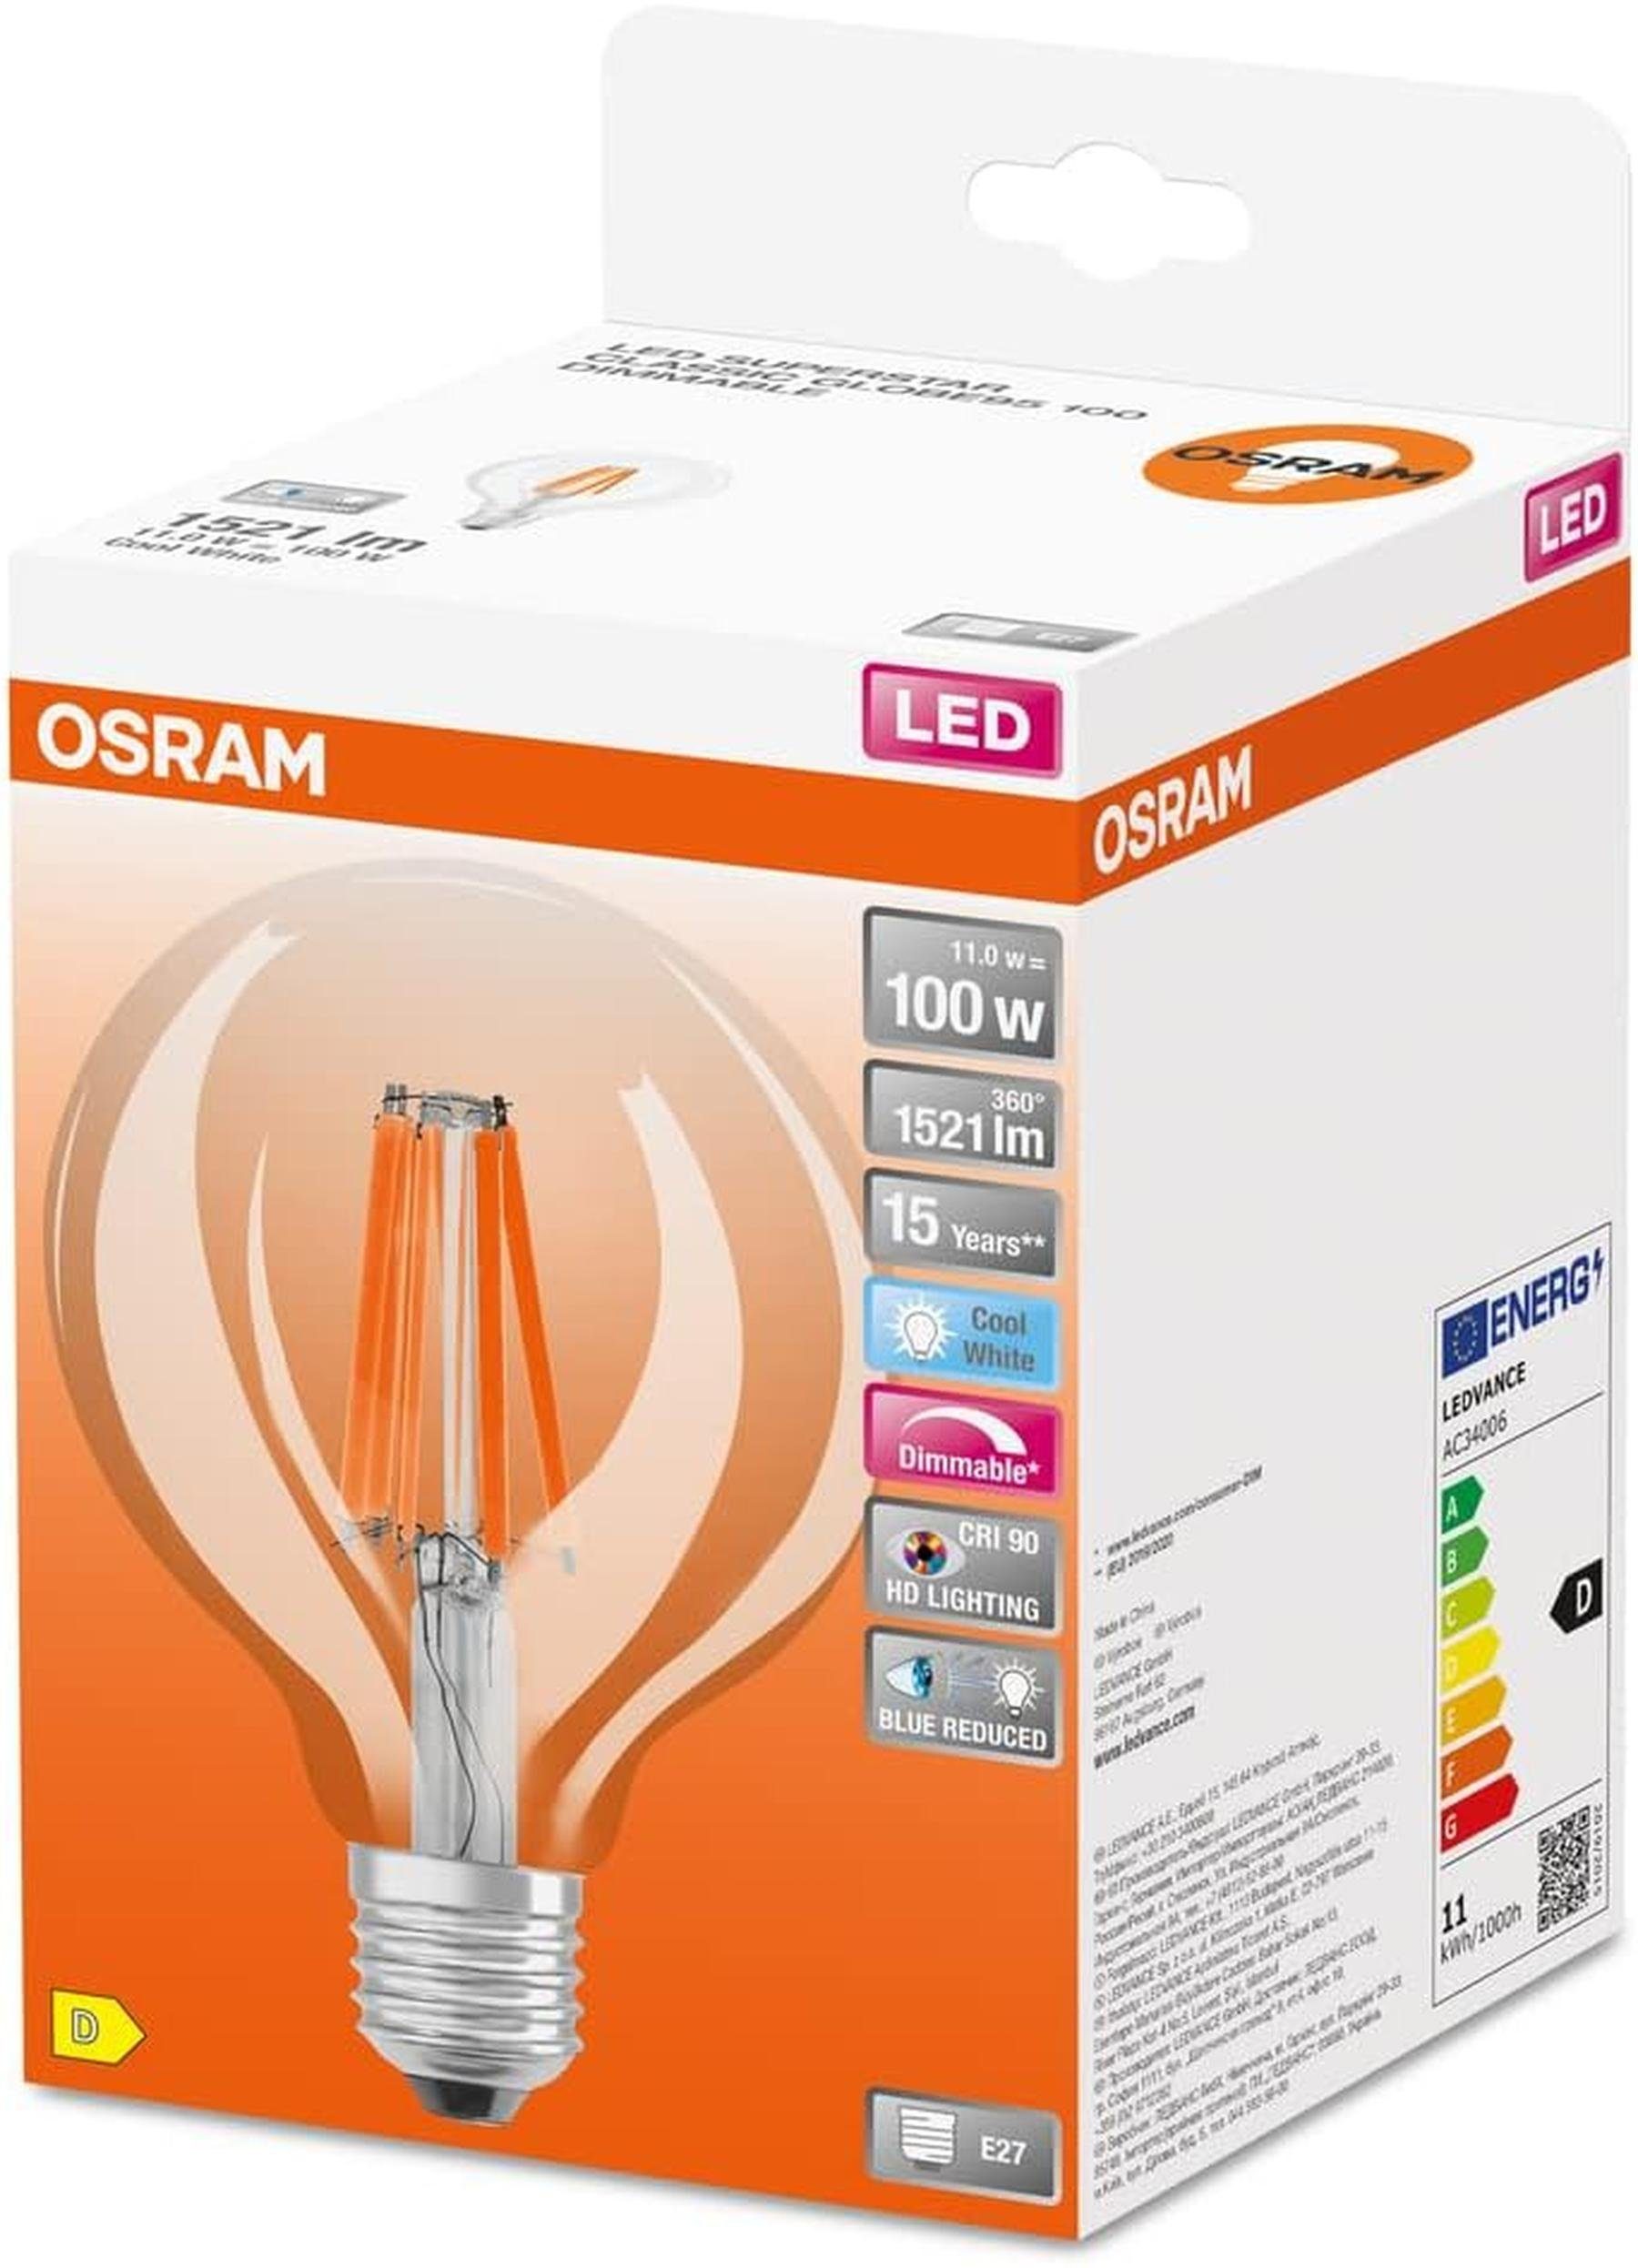 Osram-LED-Lampe-E27-dimmbar-kaltweiss, Lampe 100W Kaltweiß, LED-Leuchtmittel E27, Osram Leuchtmittel 1521 lm